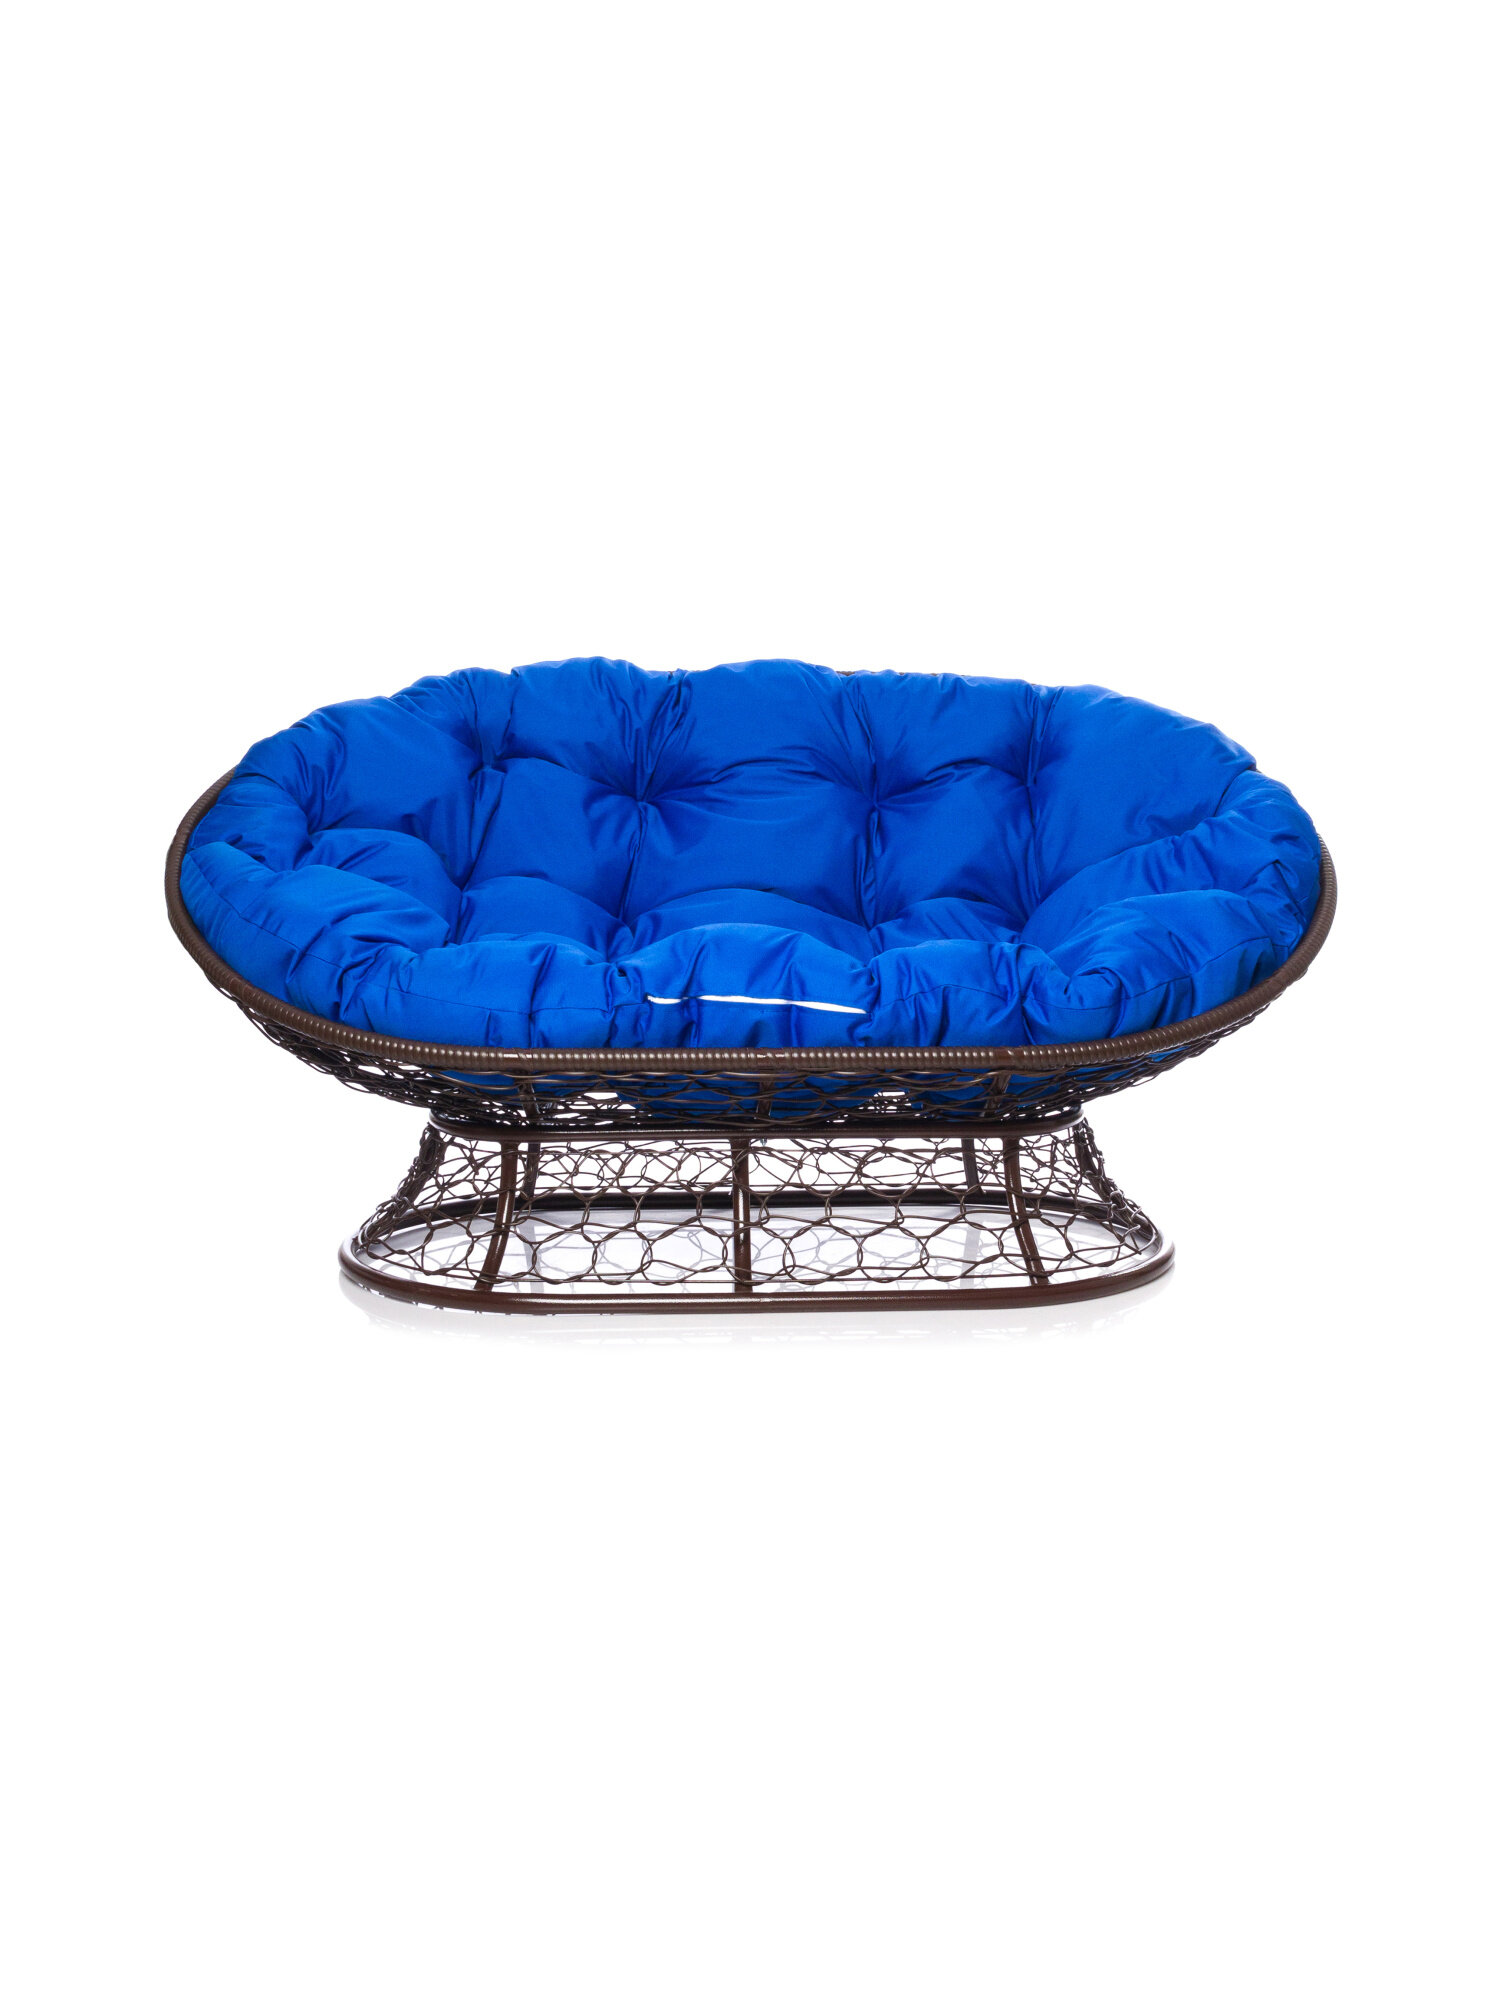 Диван M-group мамасан с ротангом коричневое синяя подушка